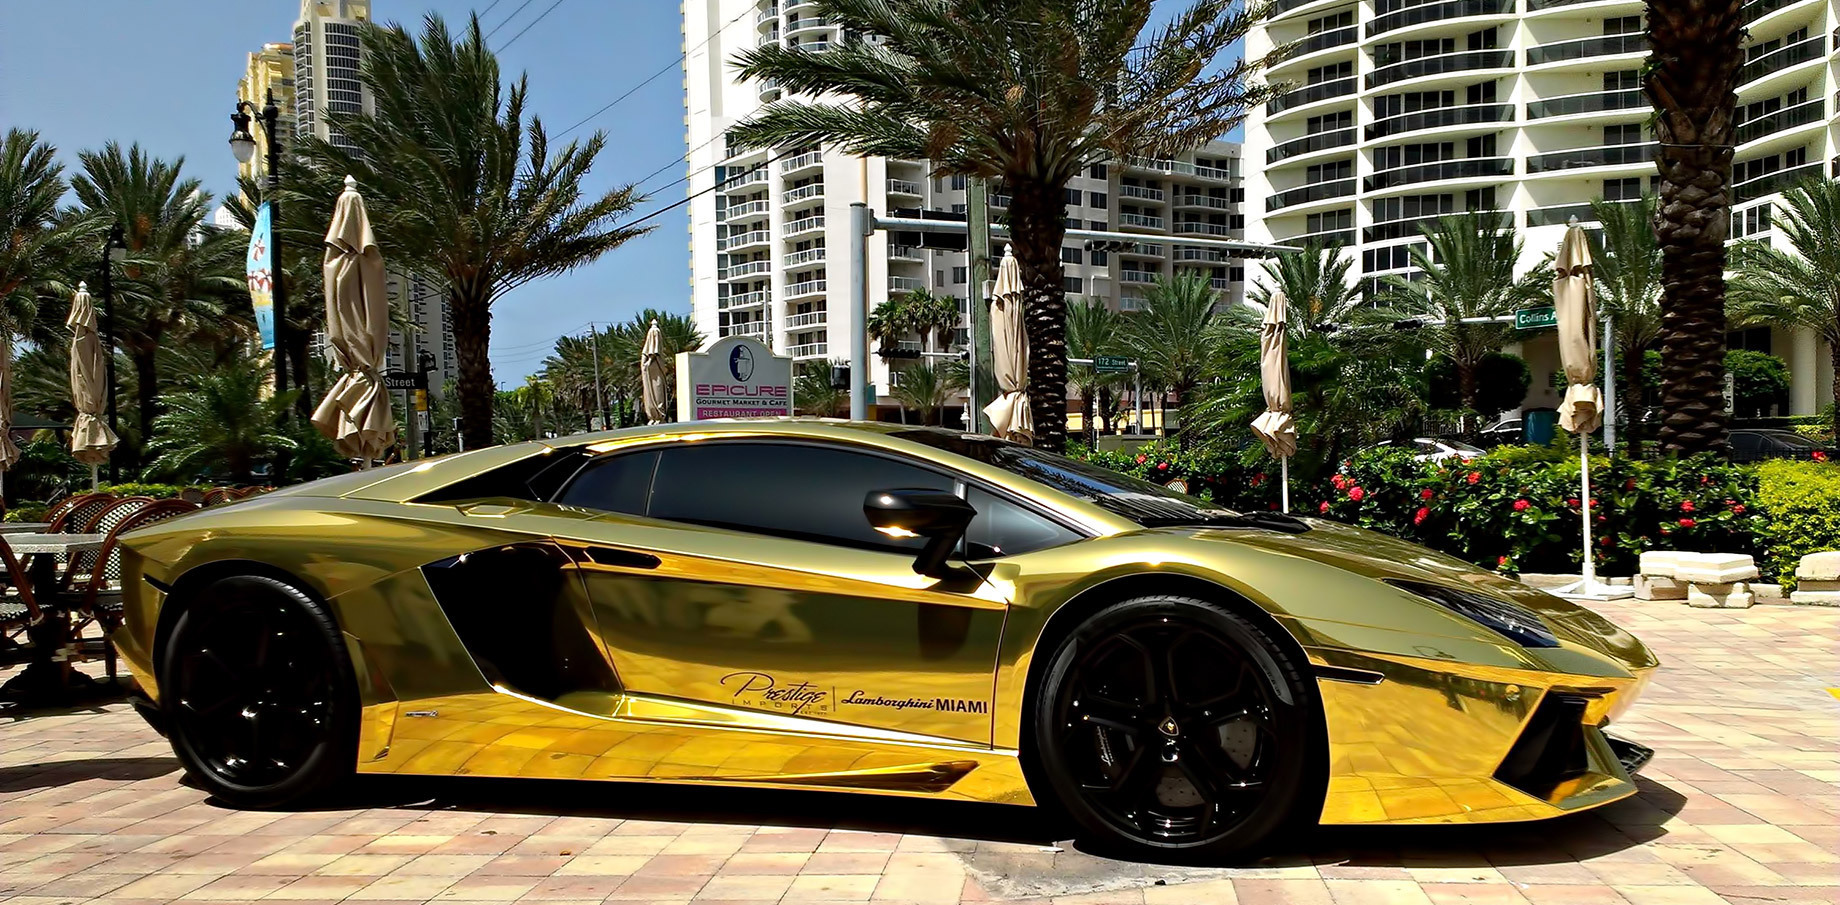 Lamborghini Aventador all made up of solid gold!